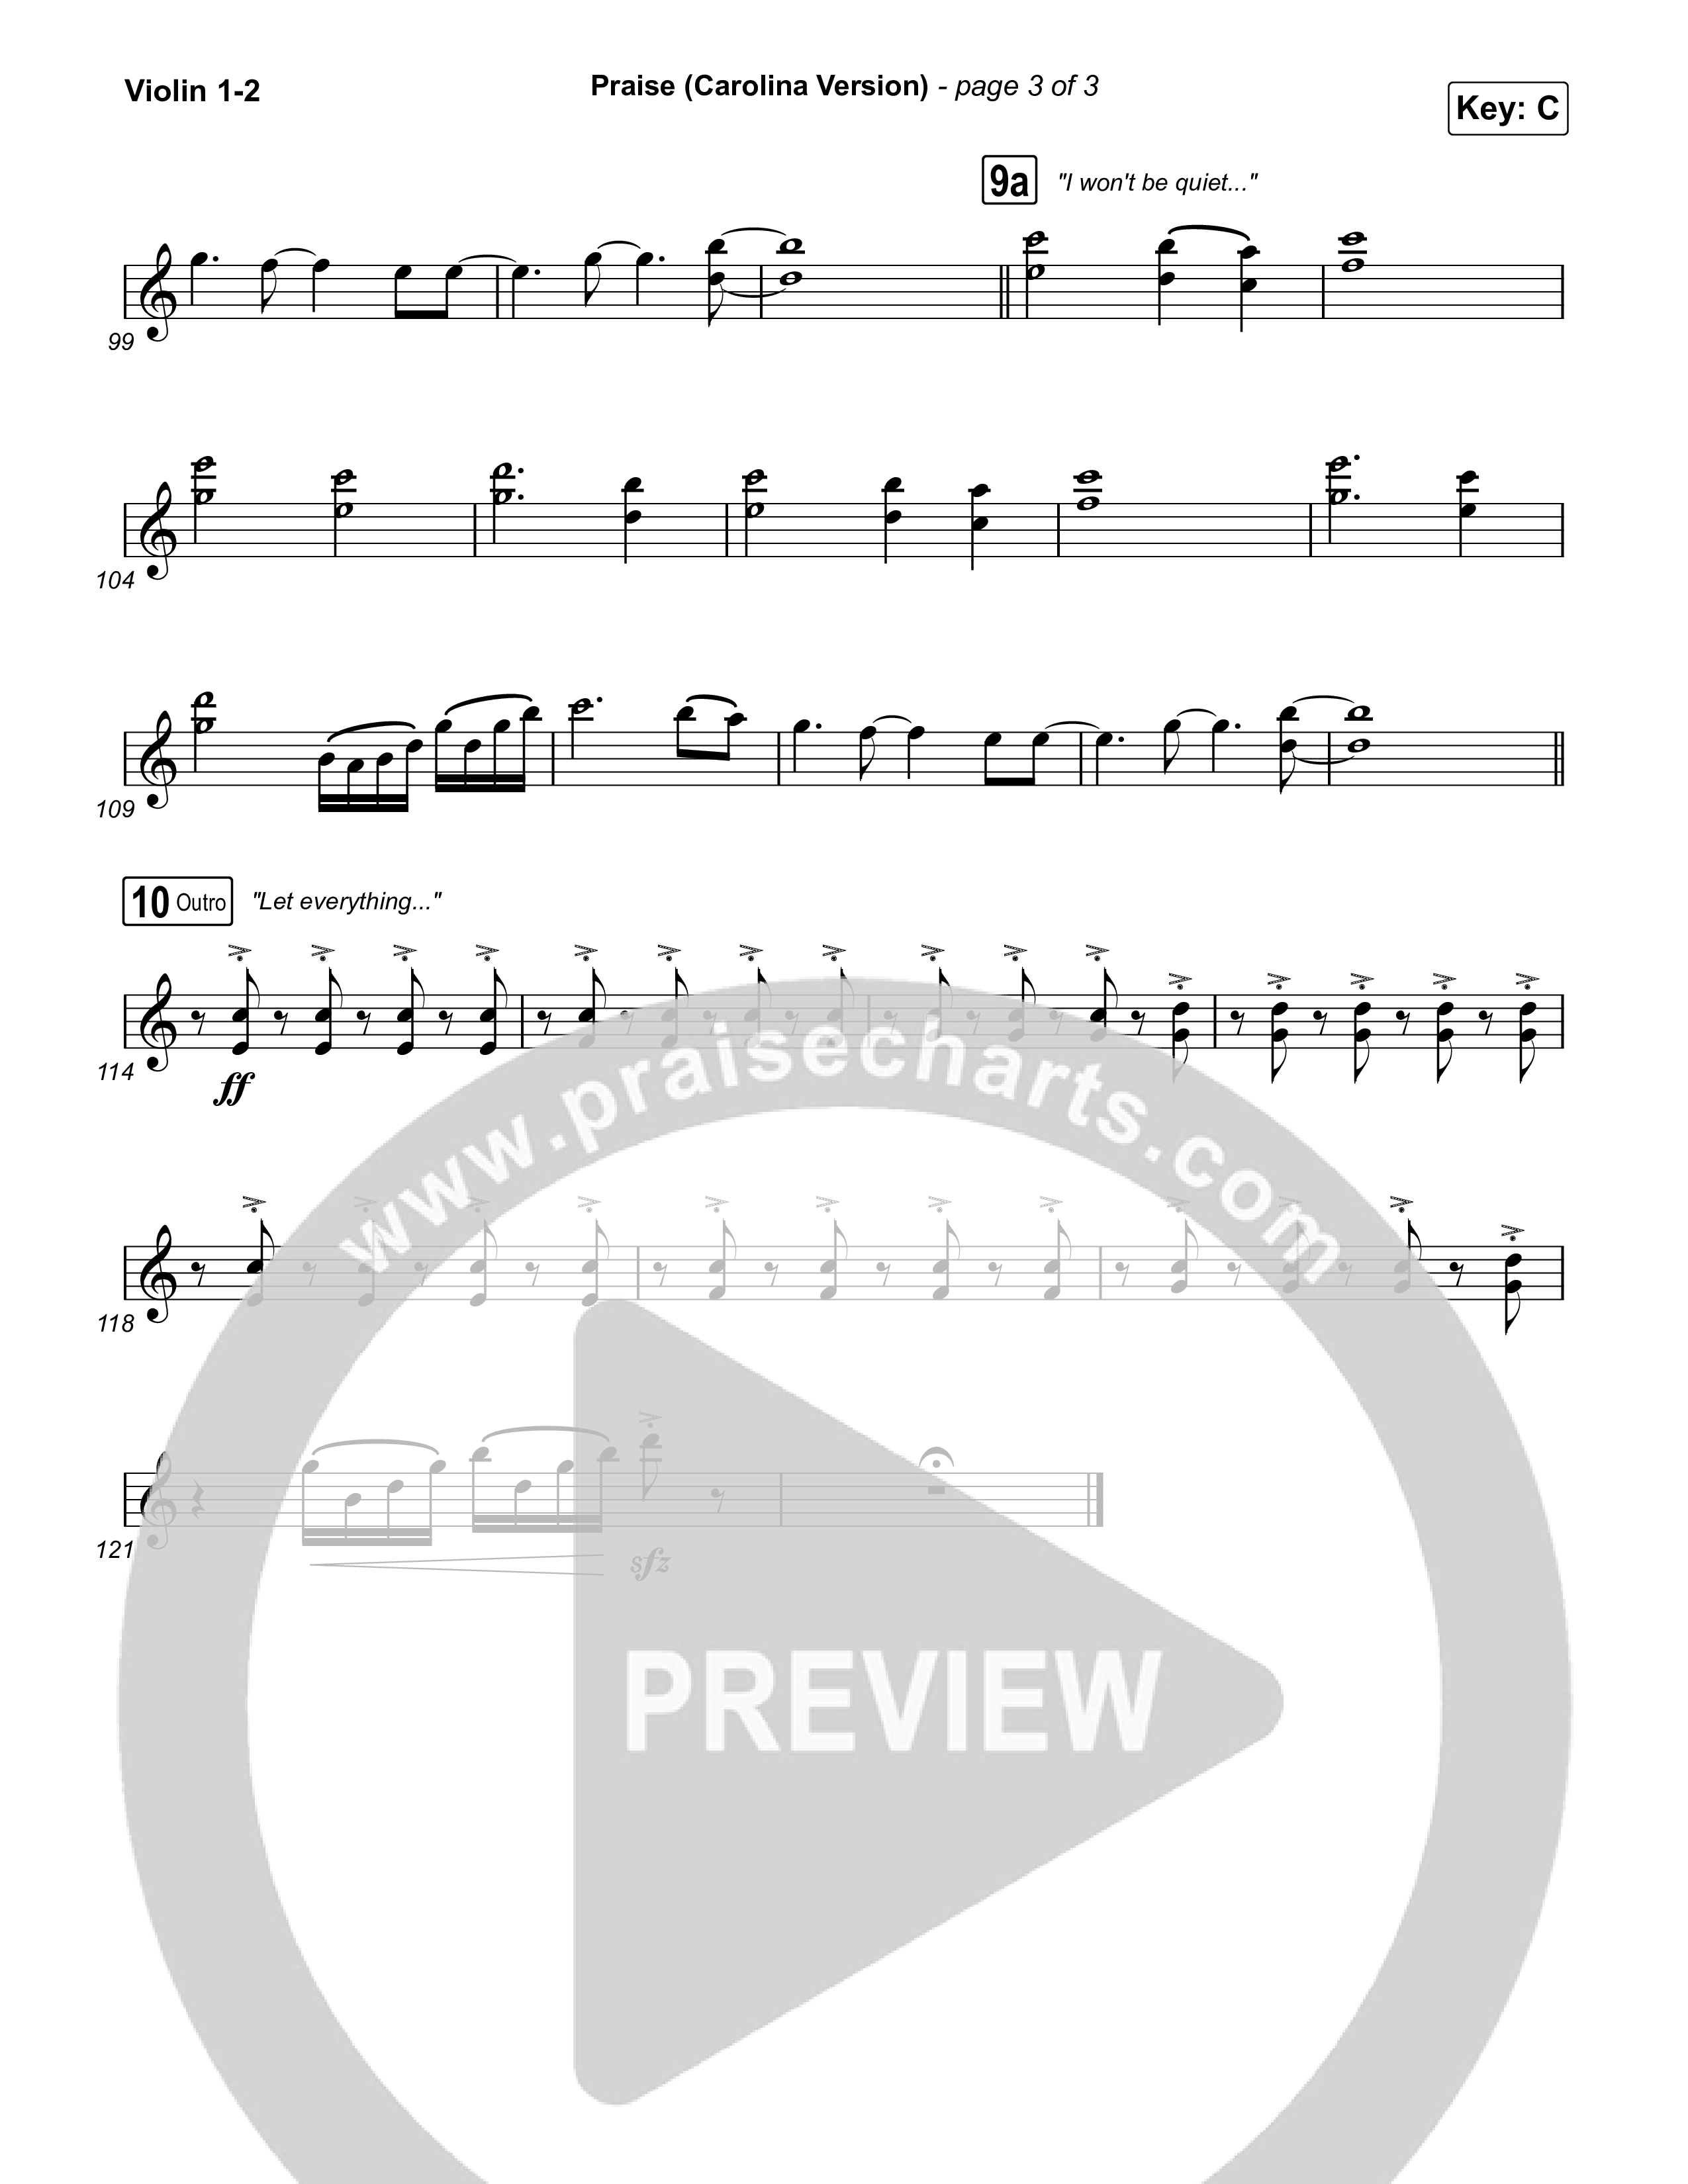 Praise (Carolina Version) Violin 1,2 (Elevation Worship)